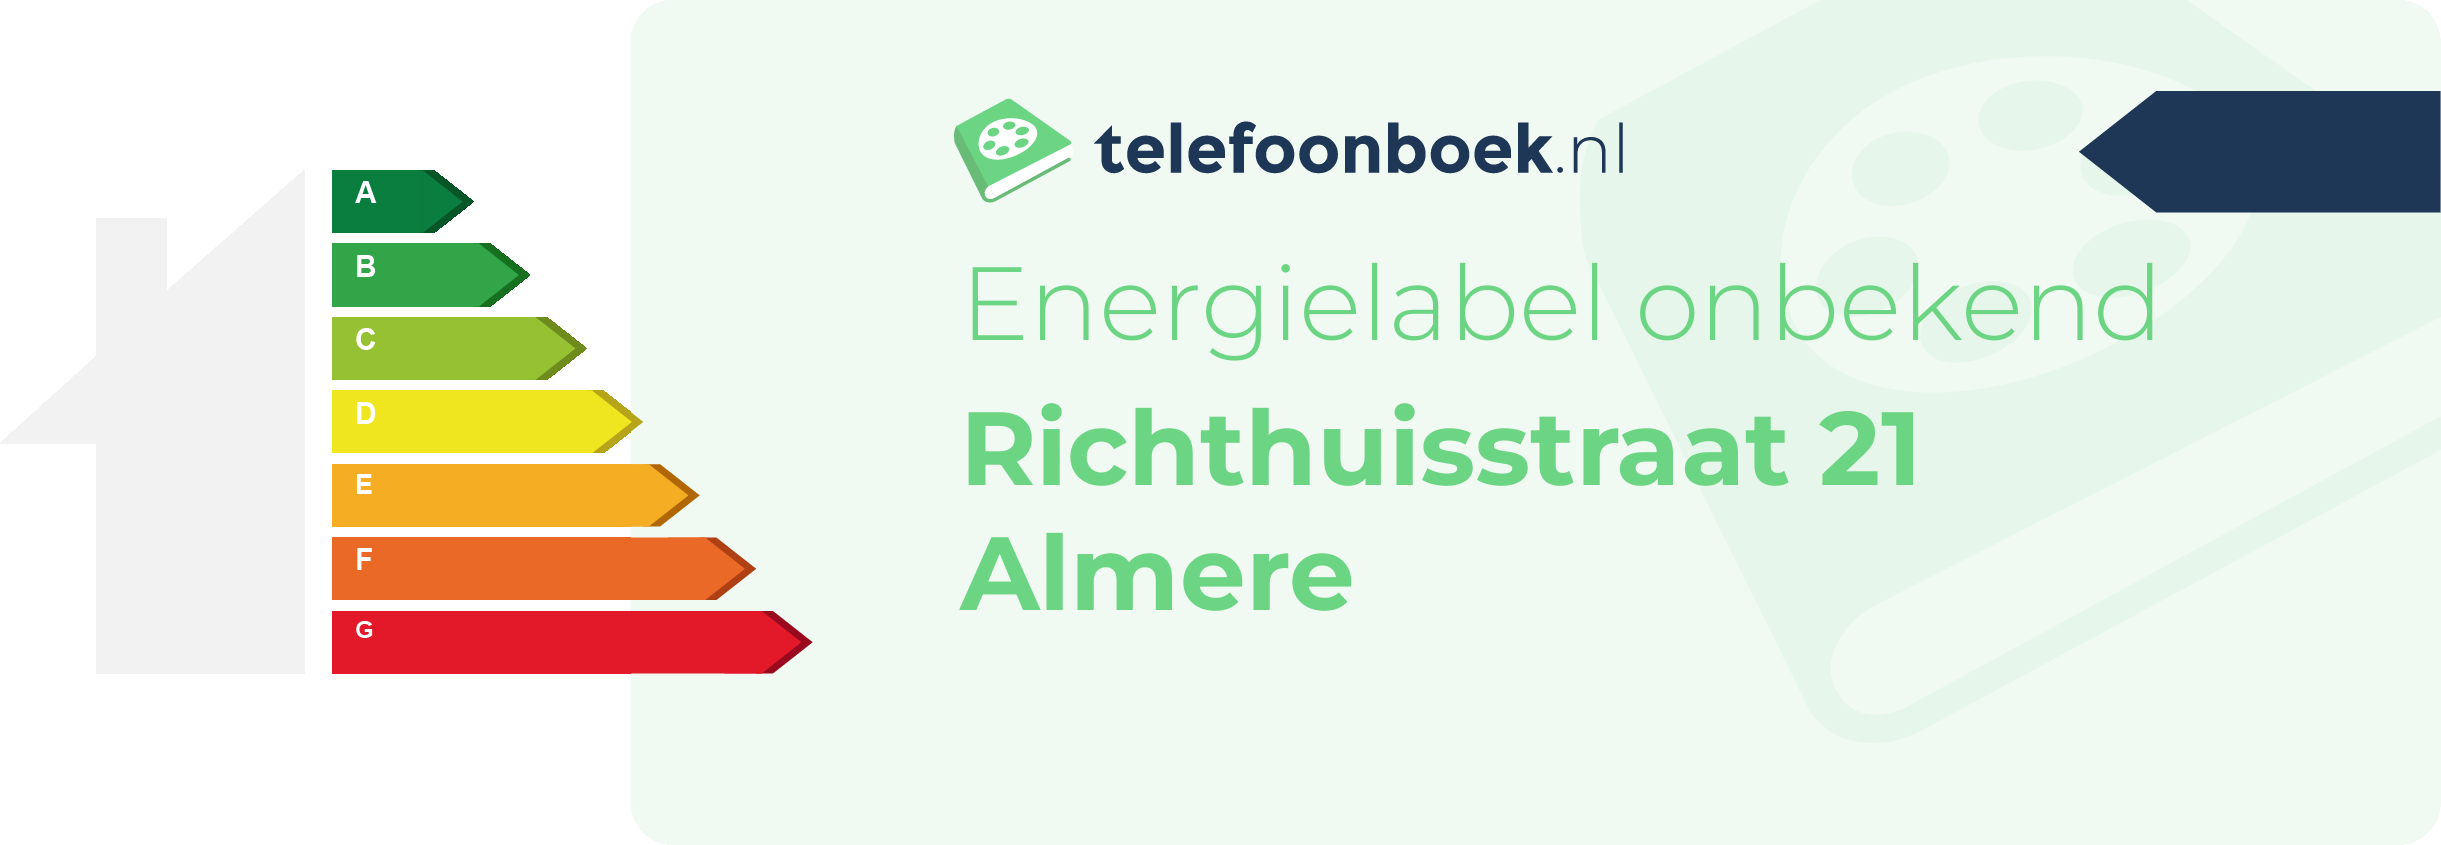 Energielabel Richthuisstraat 21 Almere